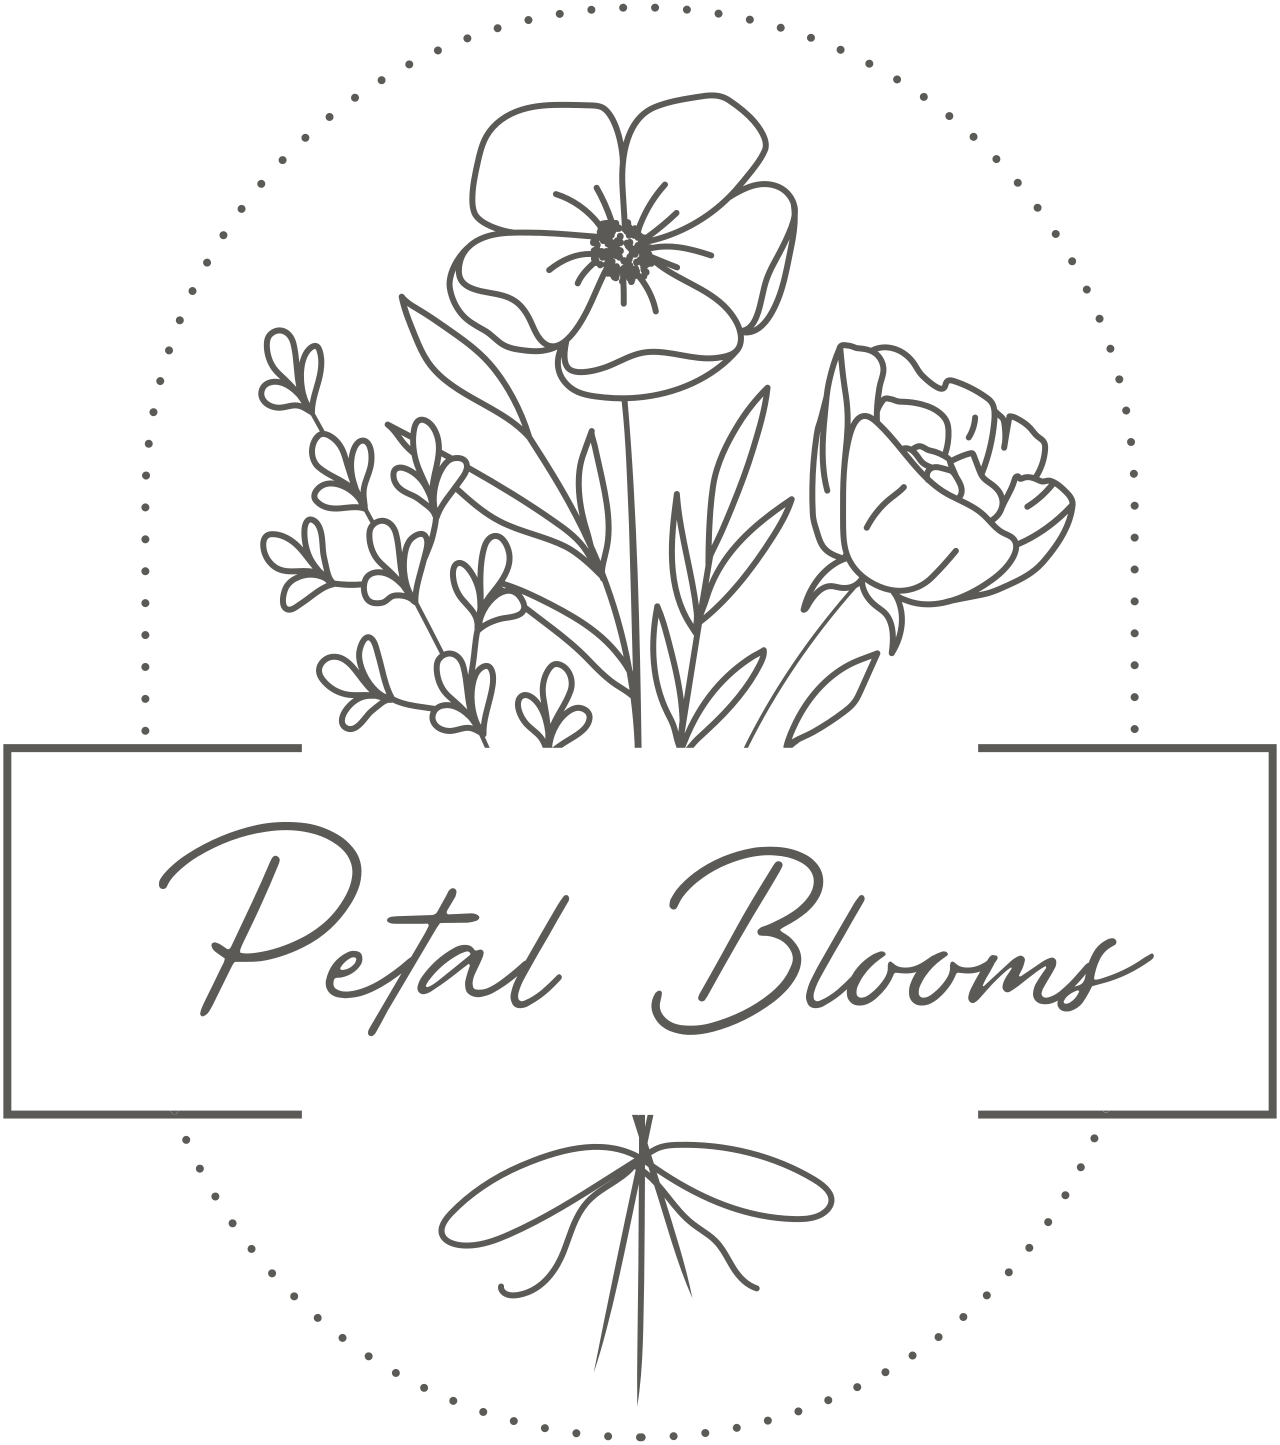 Petal Blooms's logo